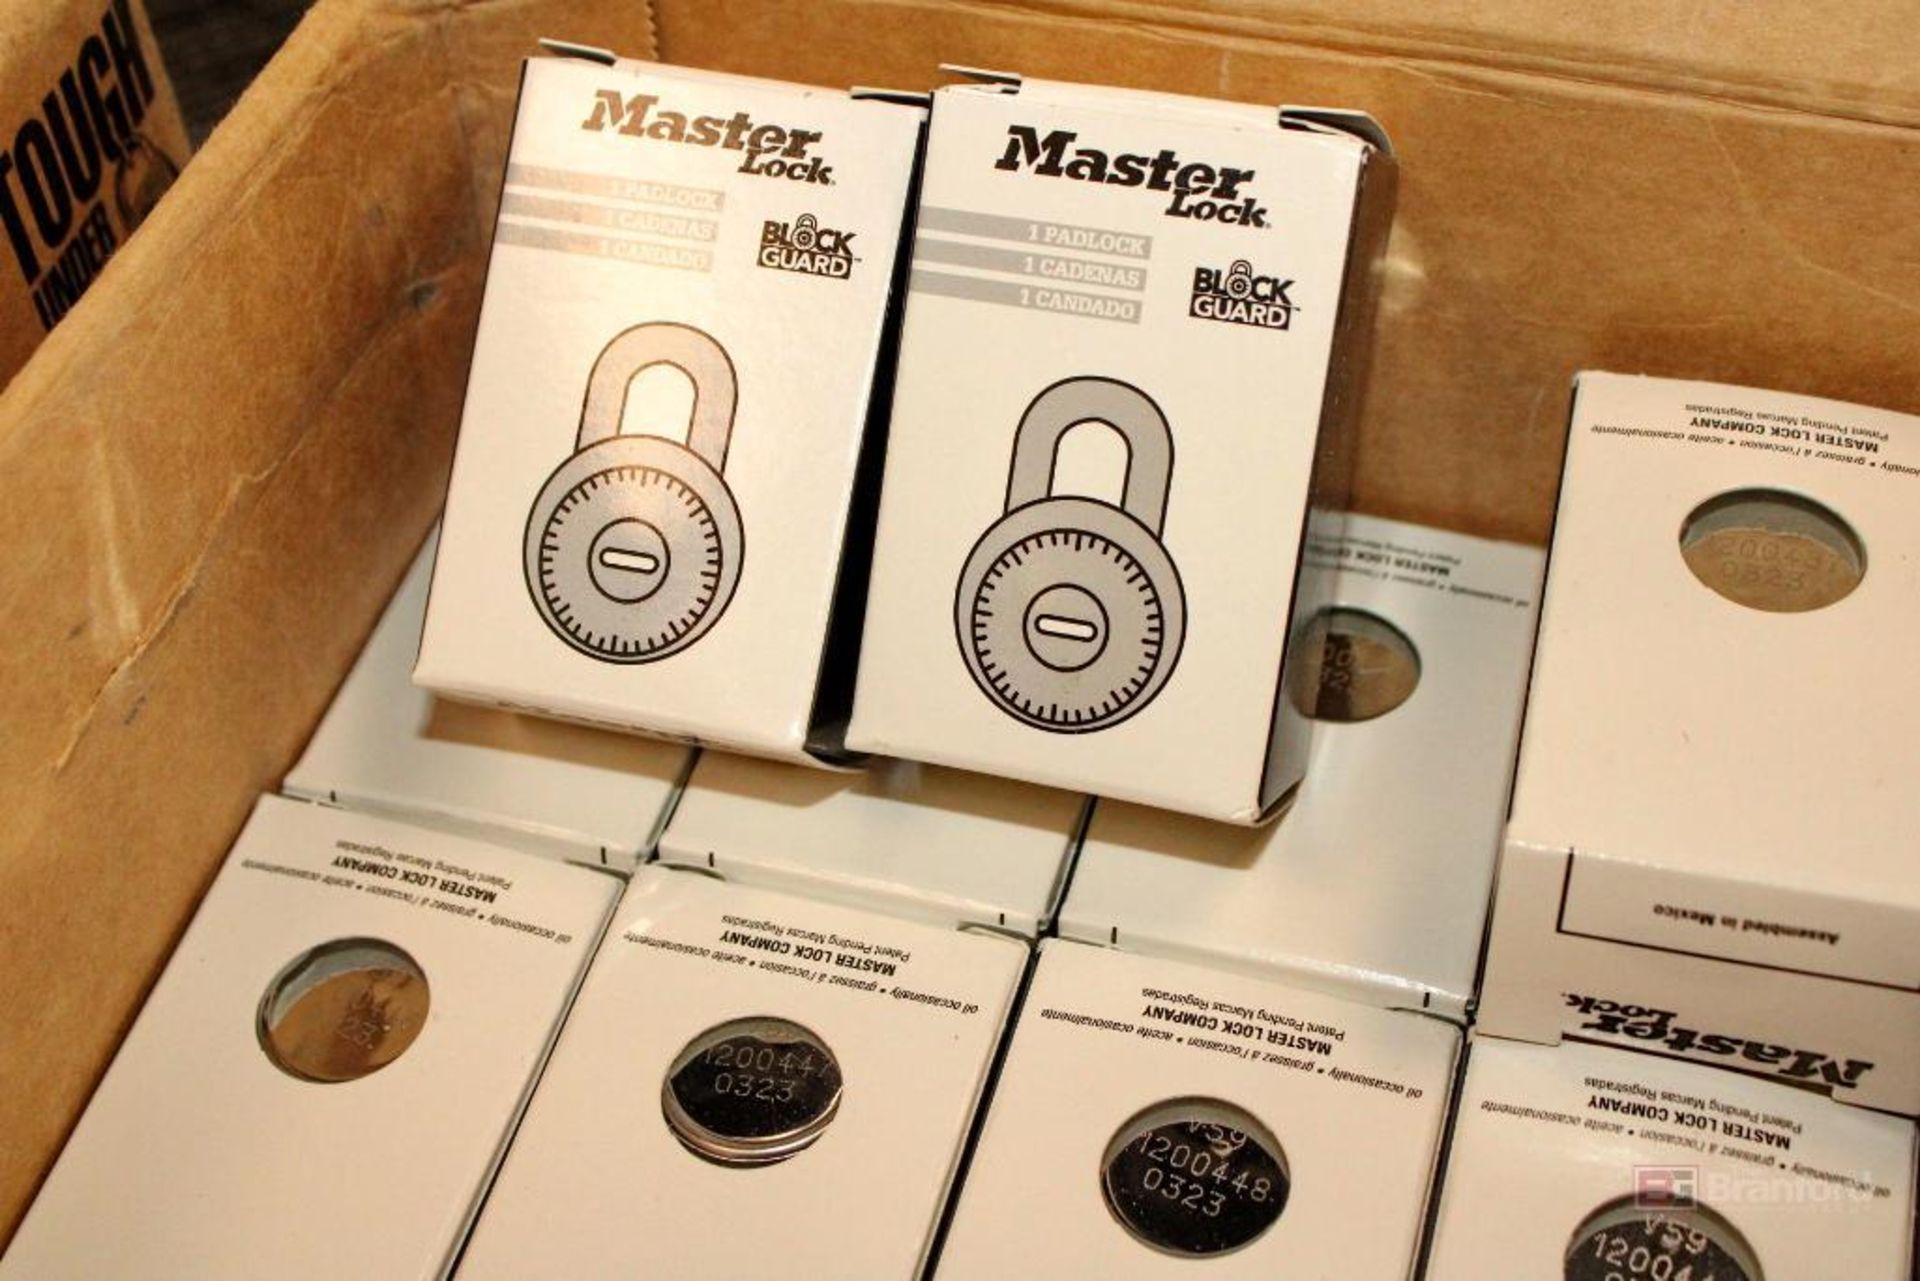 (160) Master Locks, New Padlocks - Image 2 of 3